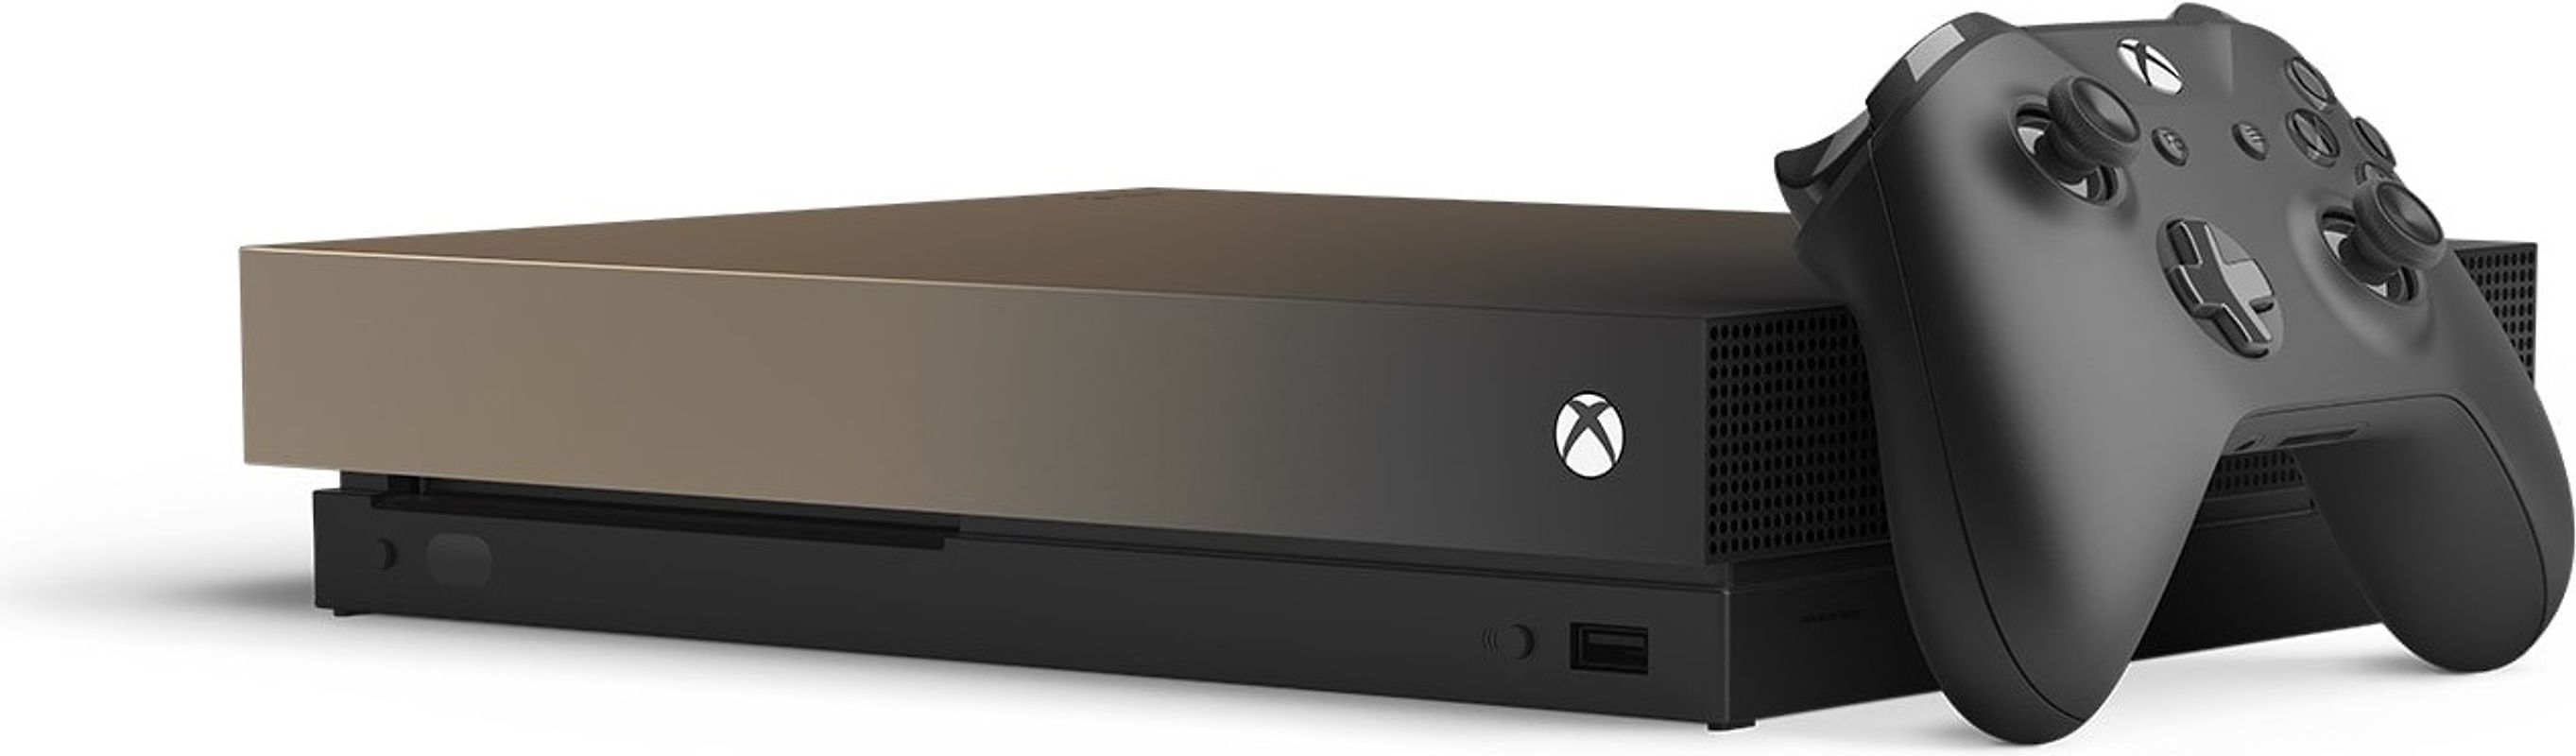 dilemma Onzeker Serie van Xbox One S en X aanbieding kopen? | Actuele-Aanbiedingen.nl